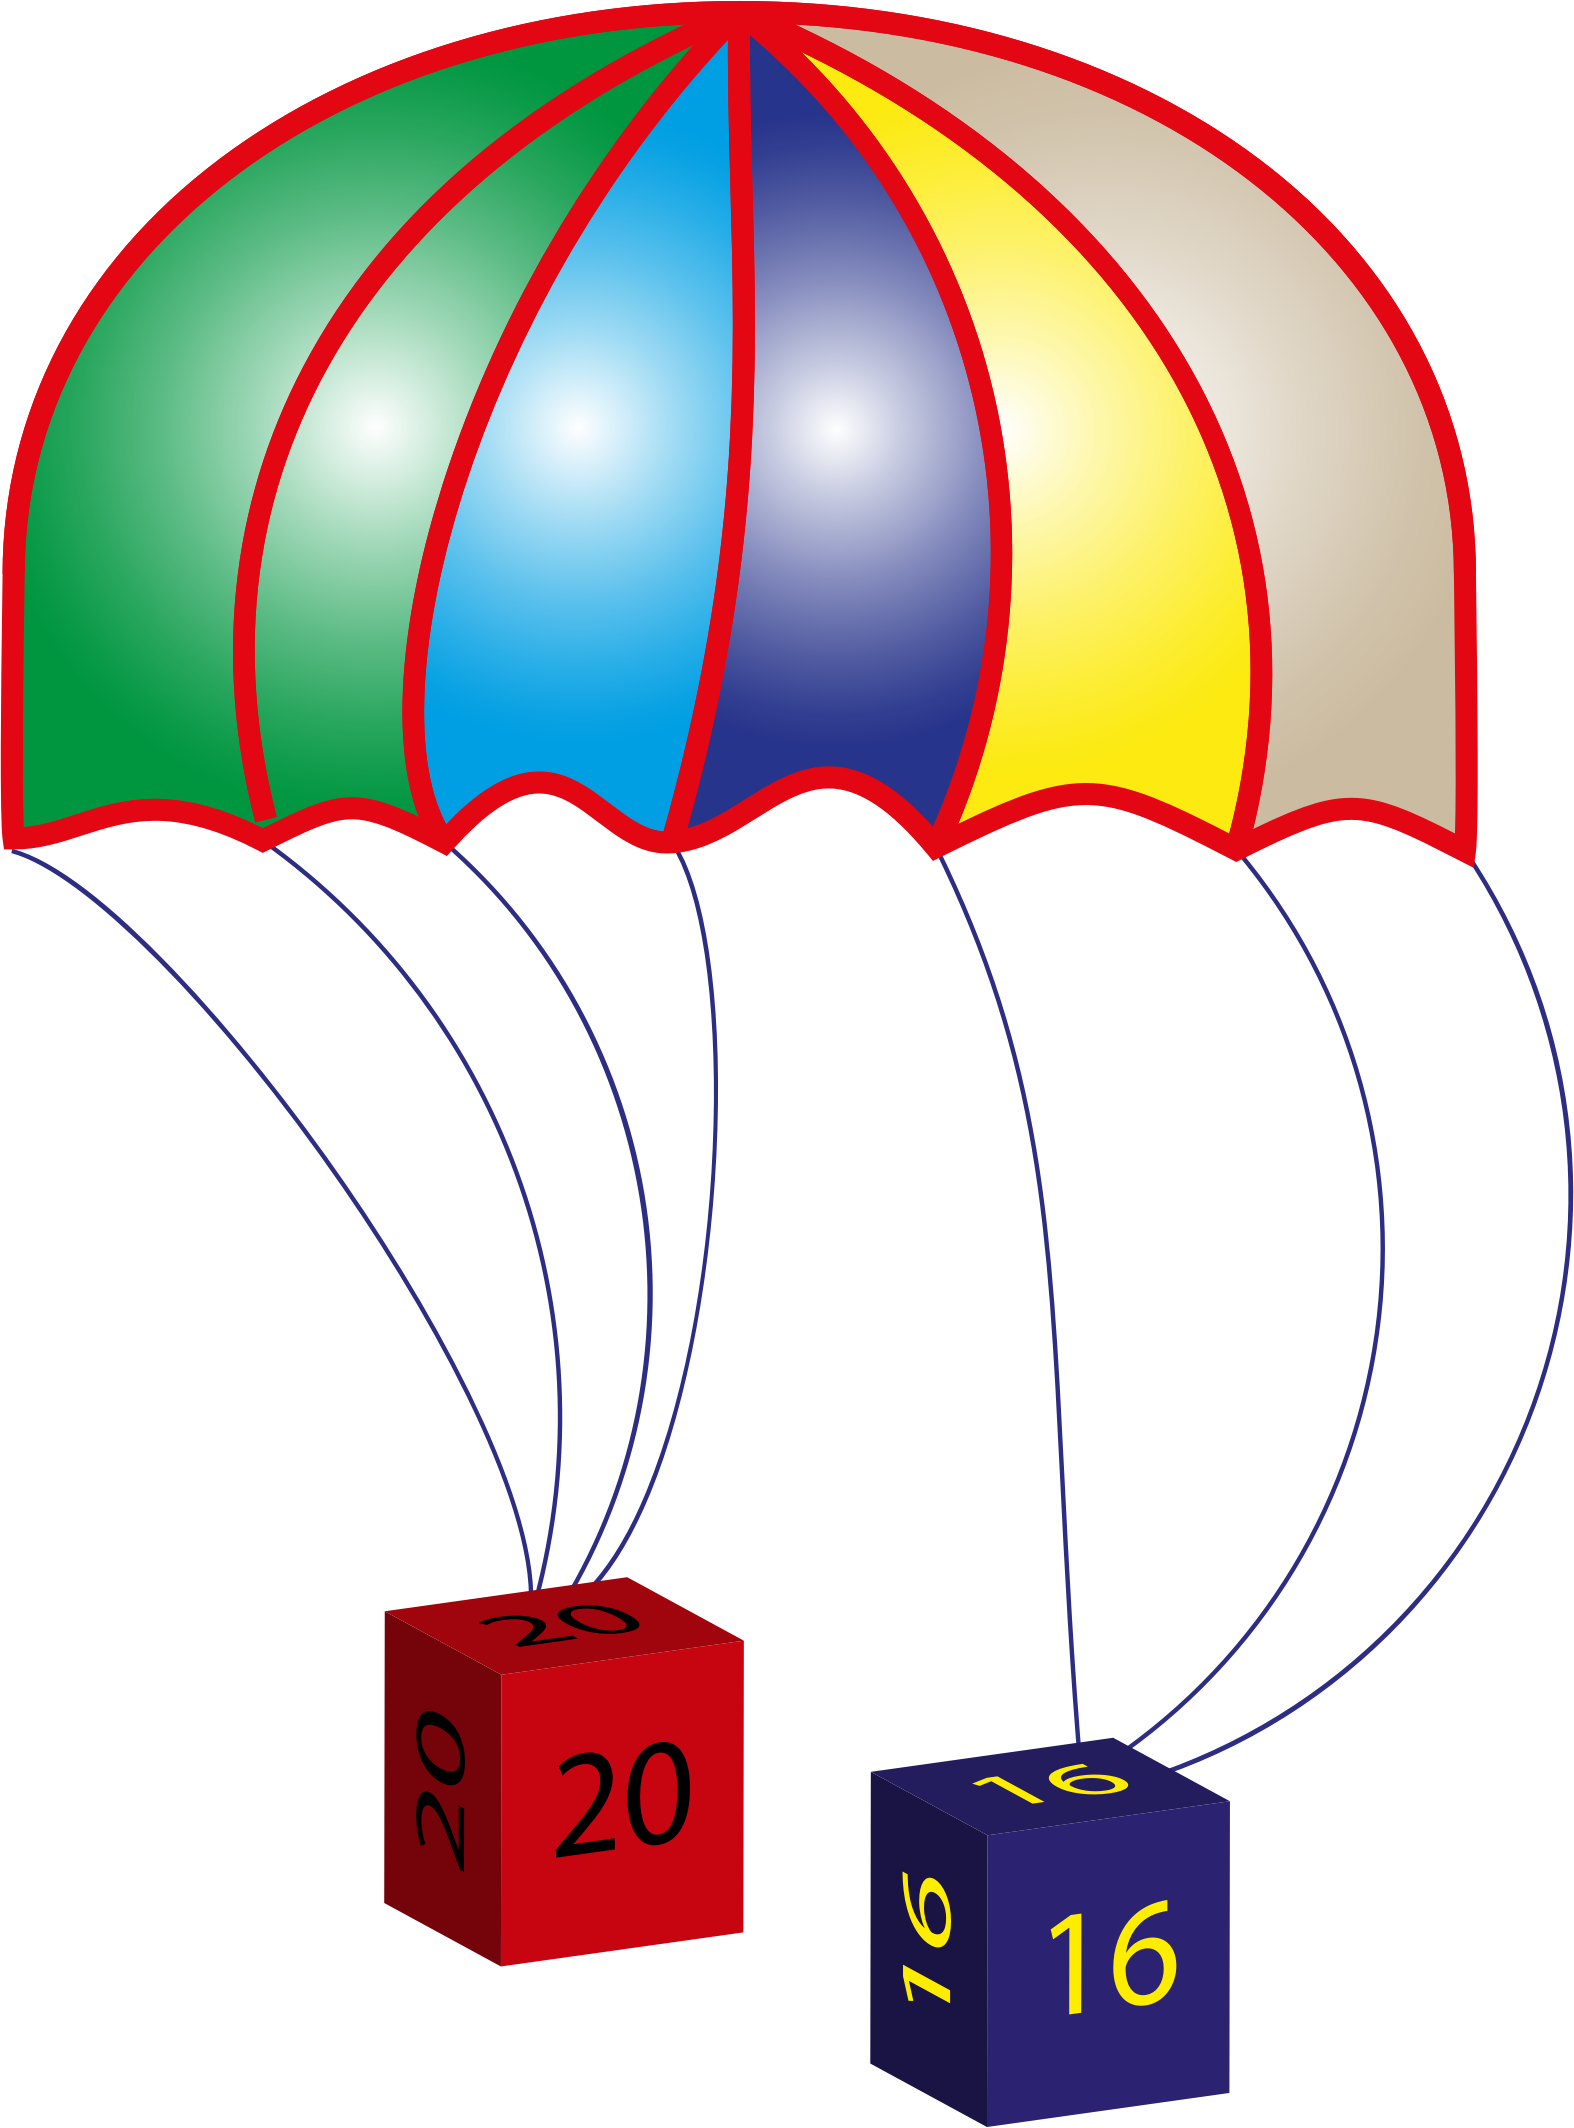 parachute clipart red parachute